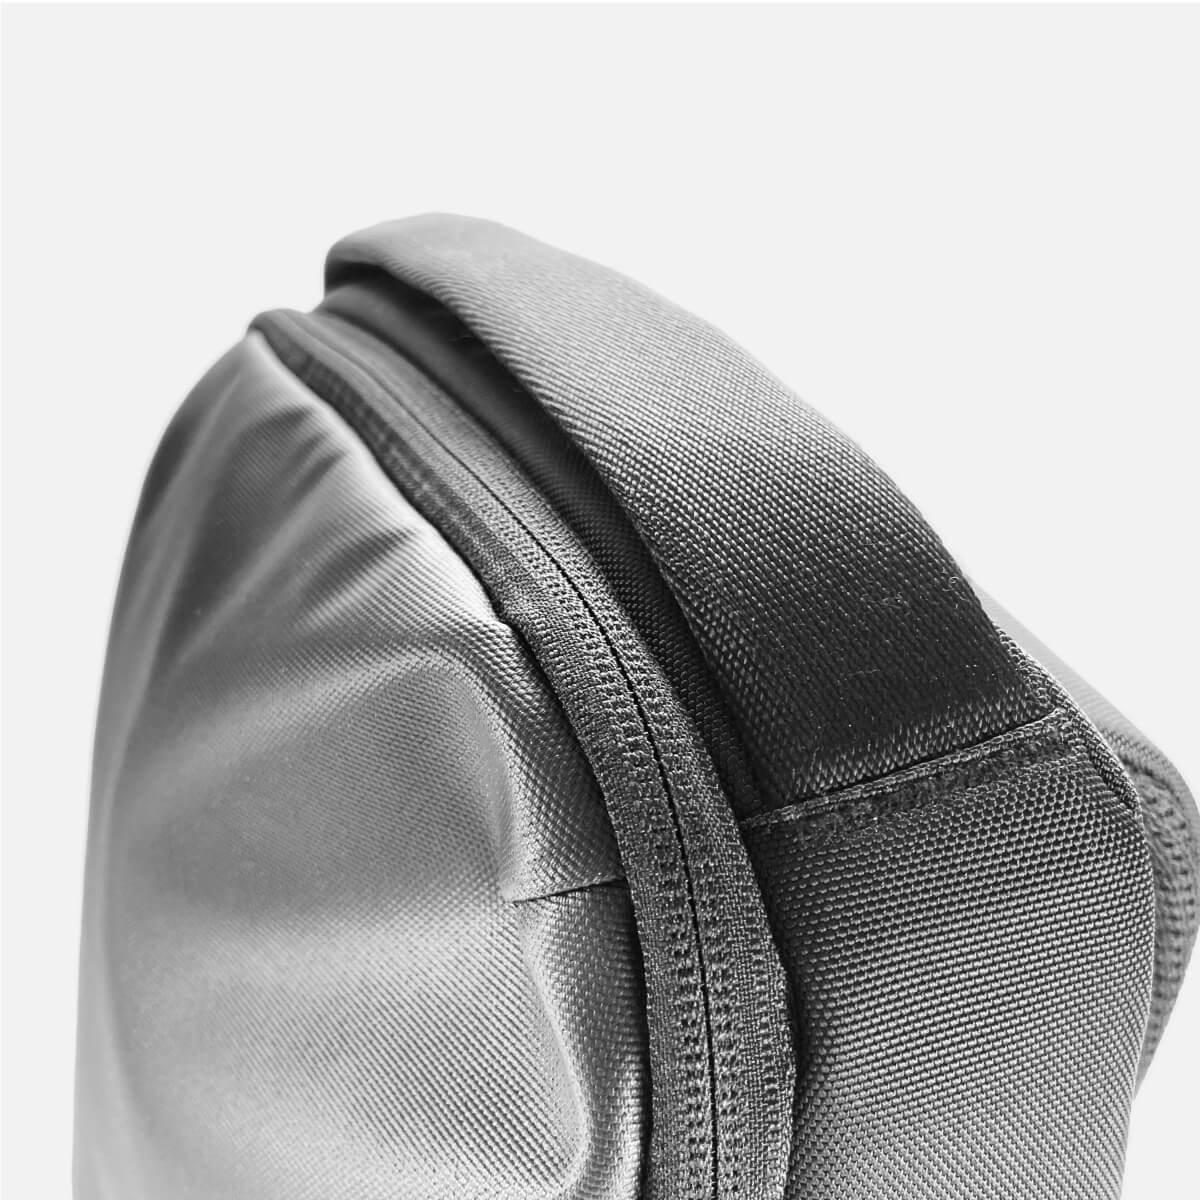 Backpack matte black color top handle view